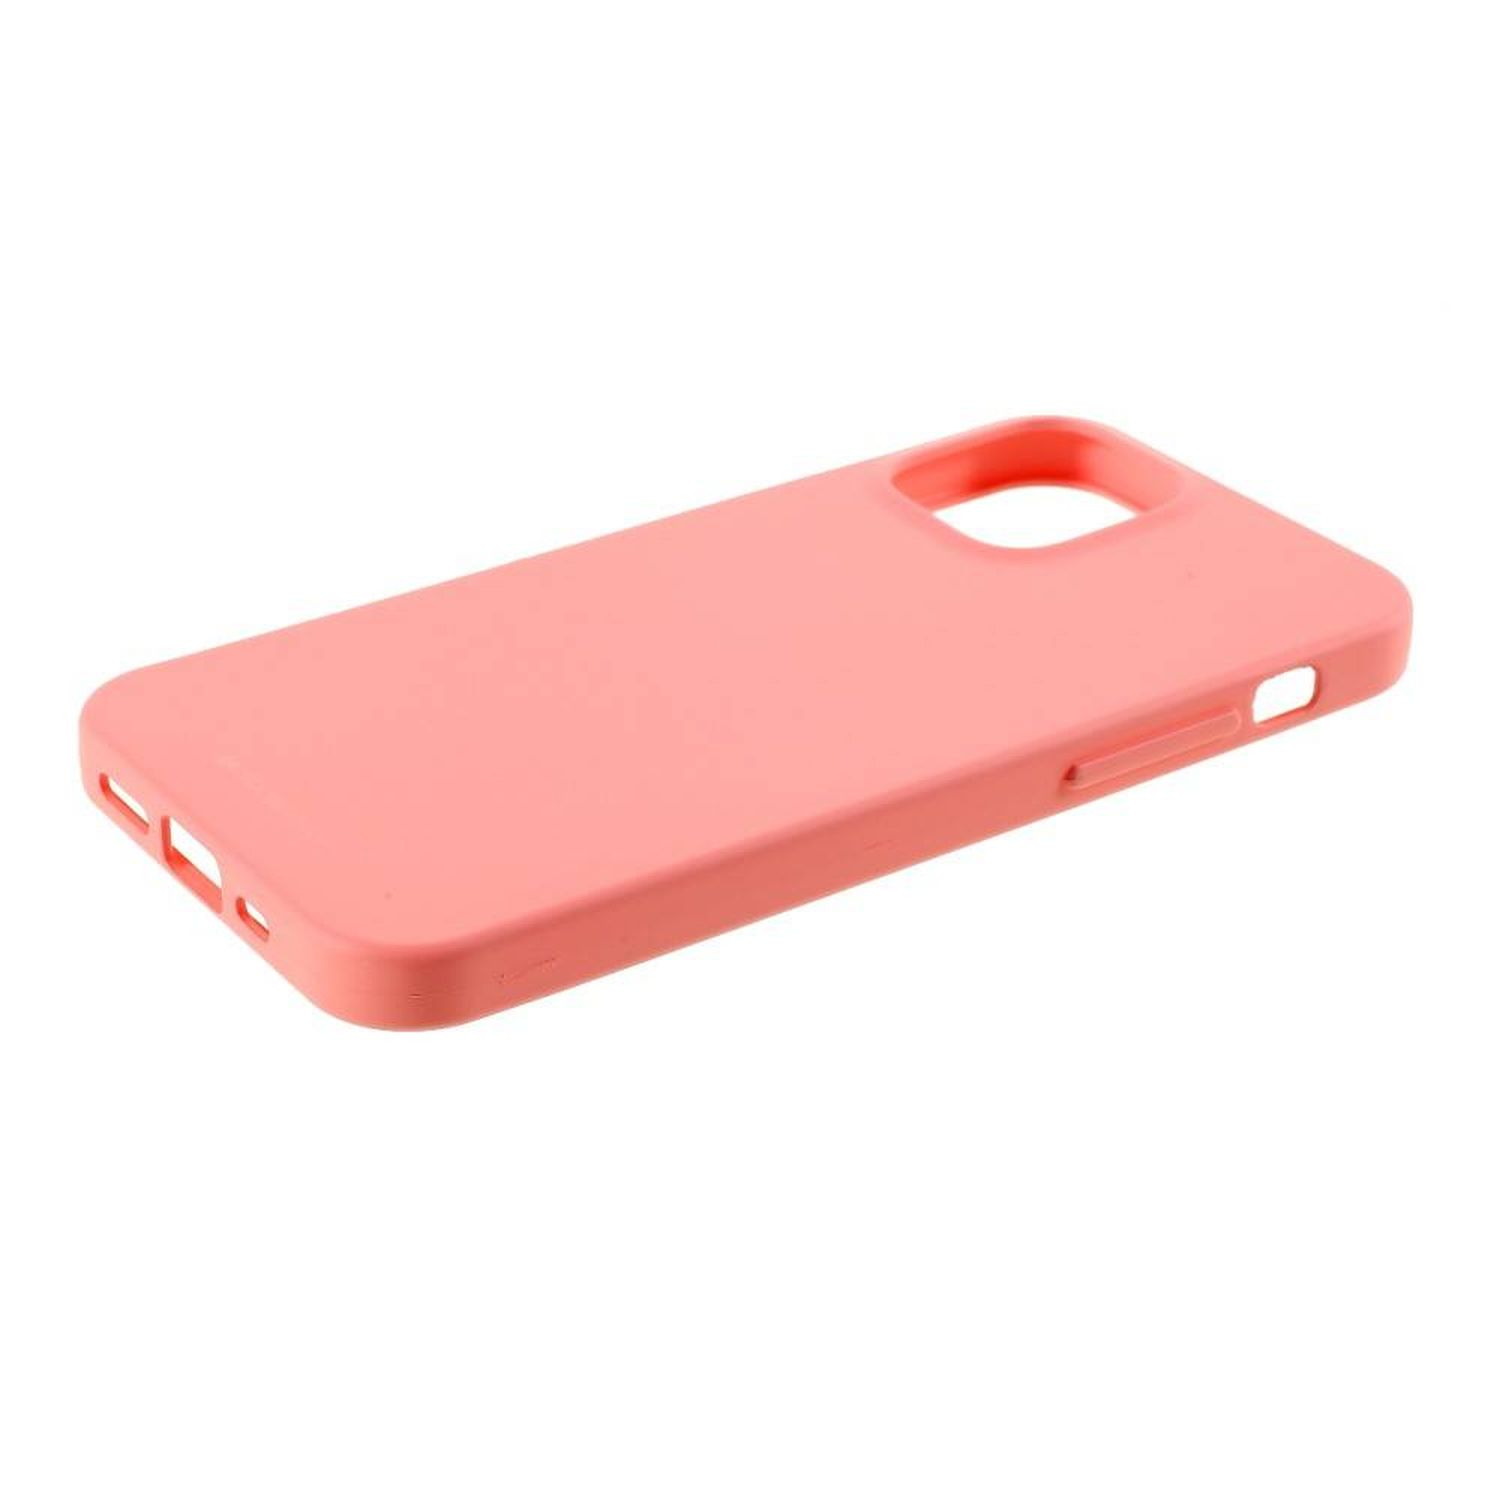 COFI cofi1453® Soft Jelly iPhone Handyhülle Bumper, Rosa, Apple, 12, 12 Rosa in Case Bumper mit Schutzhülle Case kompatibel iPhone